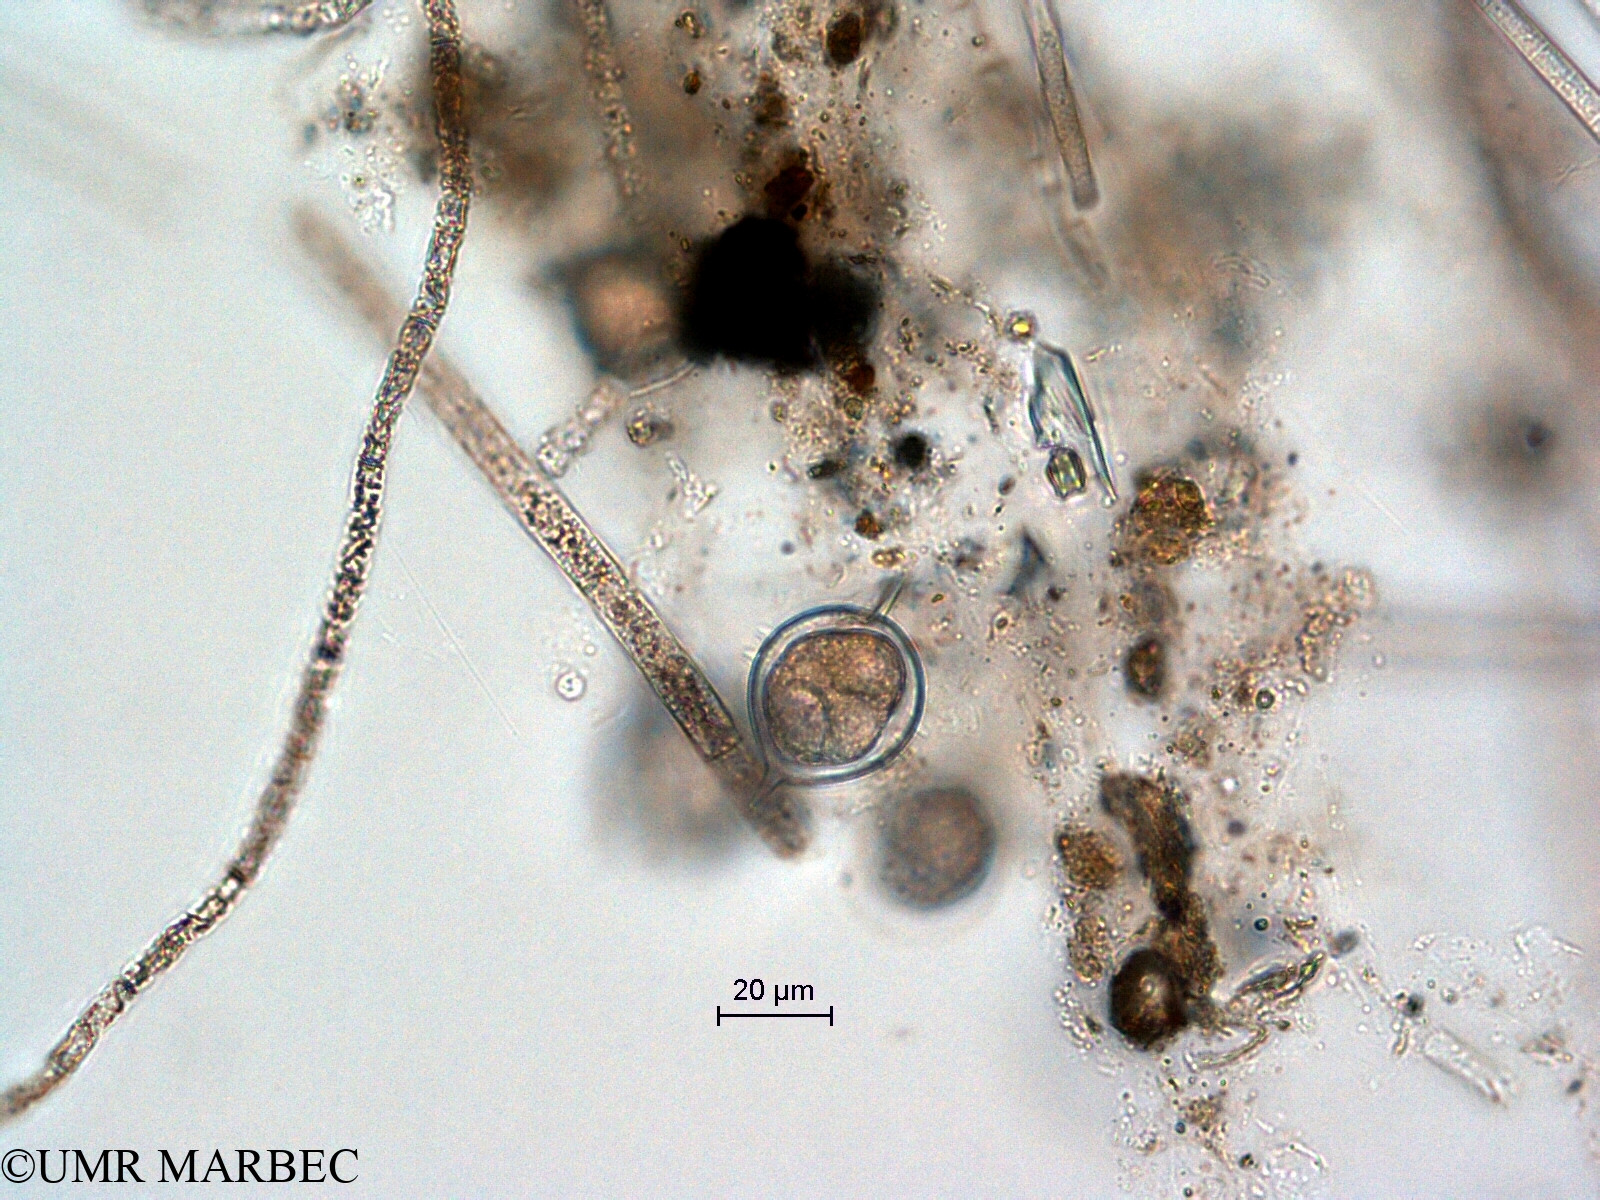 phyto/Scattered_Islands/all/COMMA April 2011/Protoperidinium cassum (ancien Protoperidinium sp2 recomposé -2)(copy).jpg